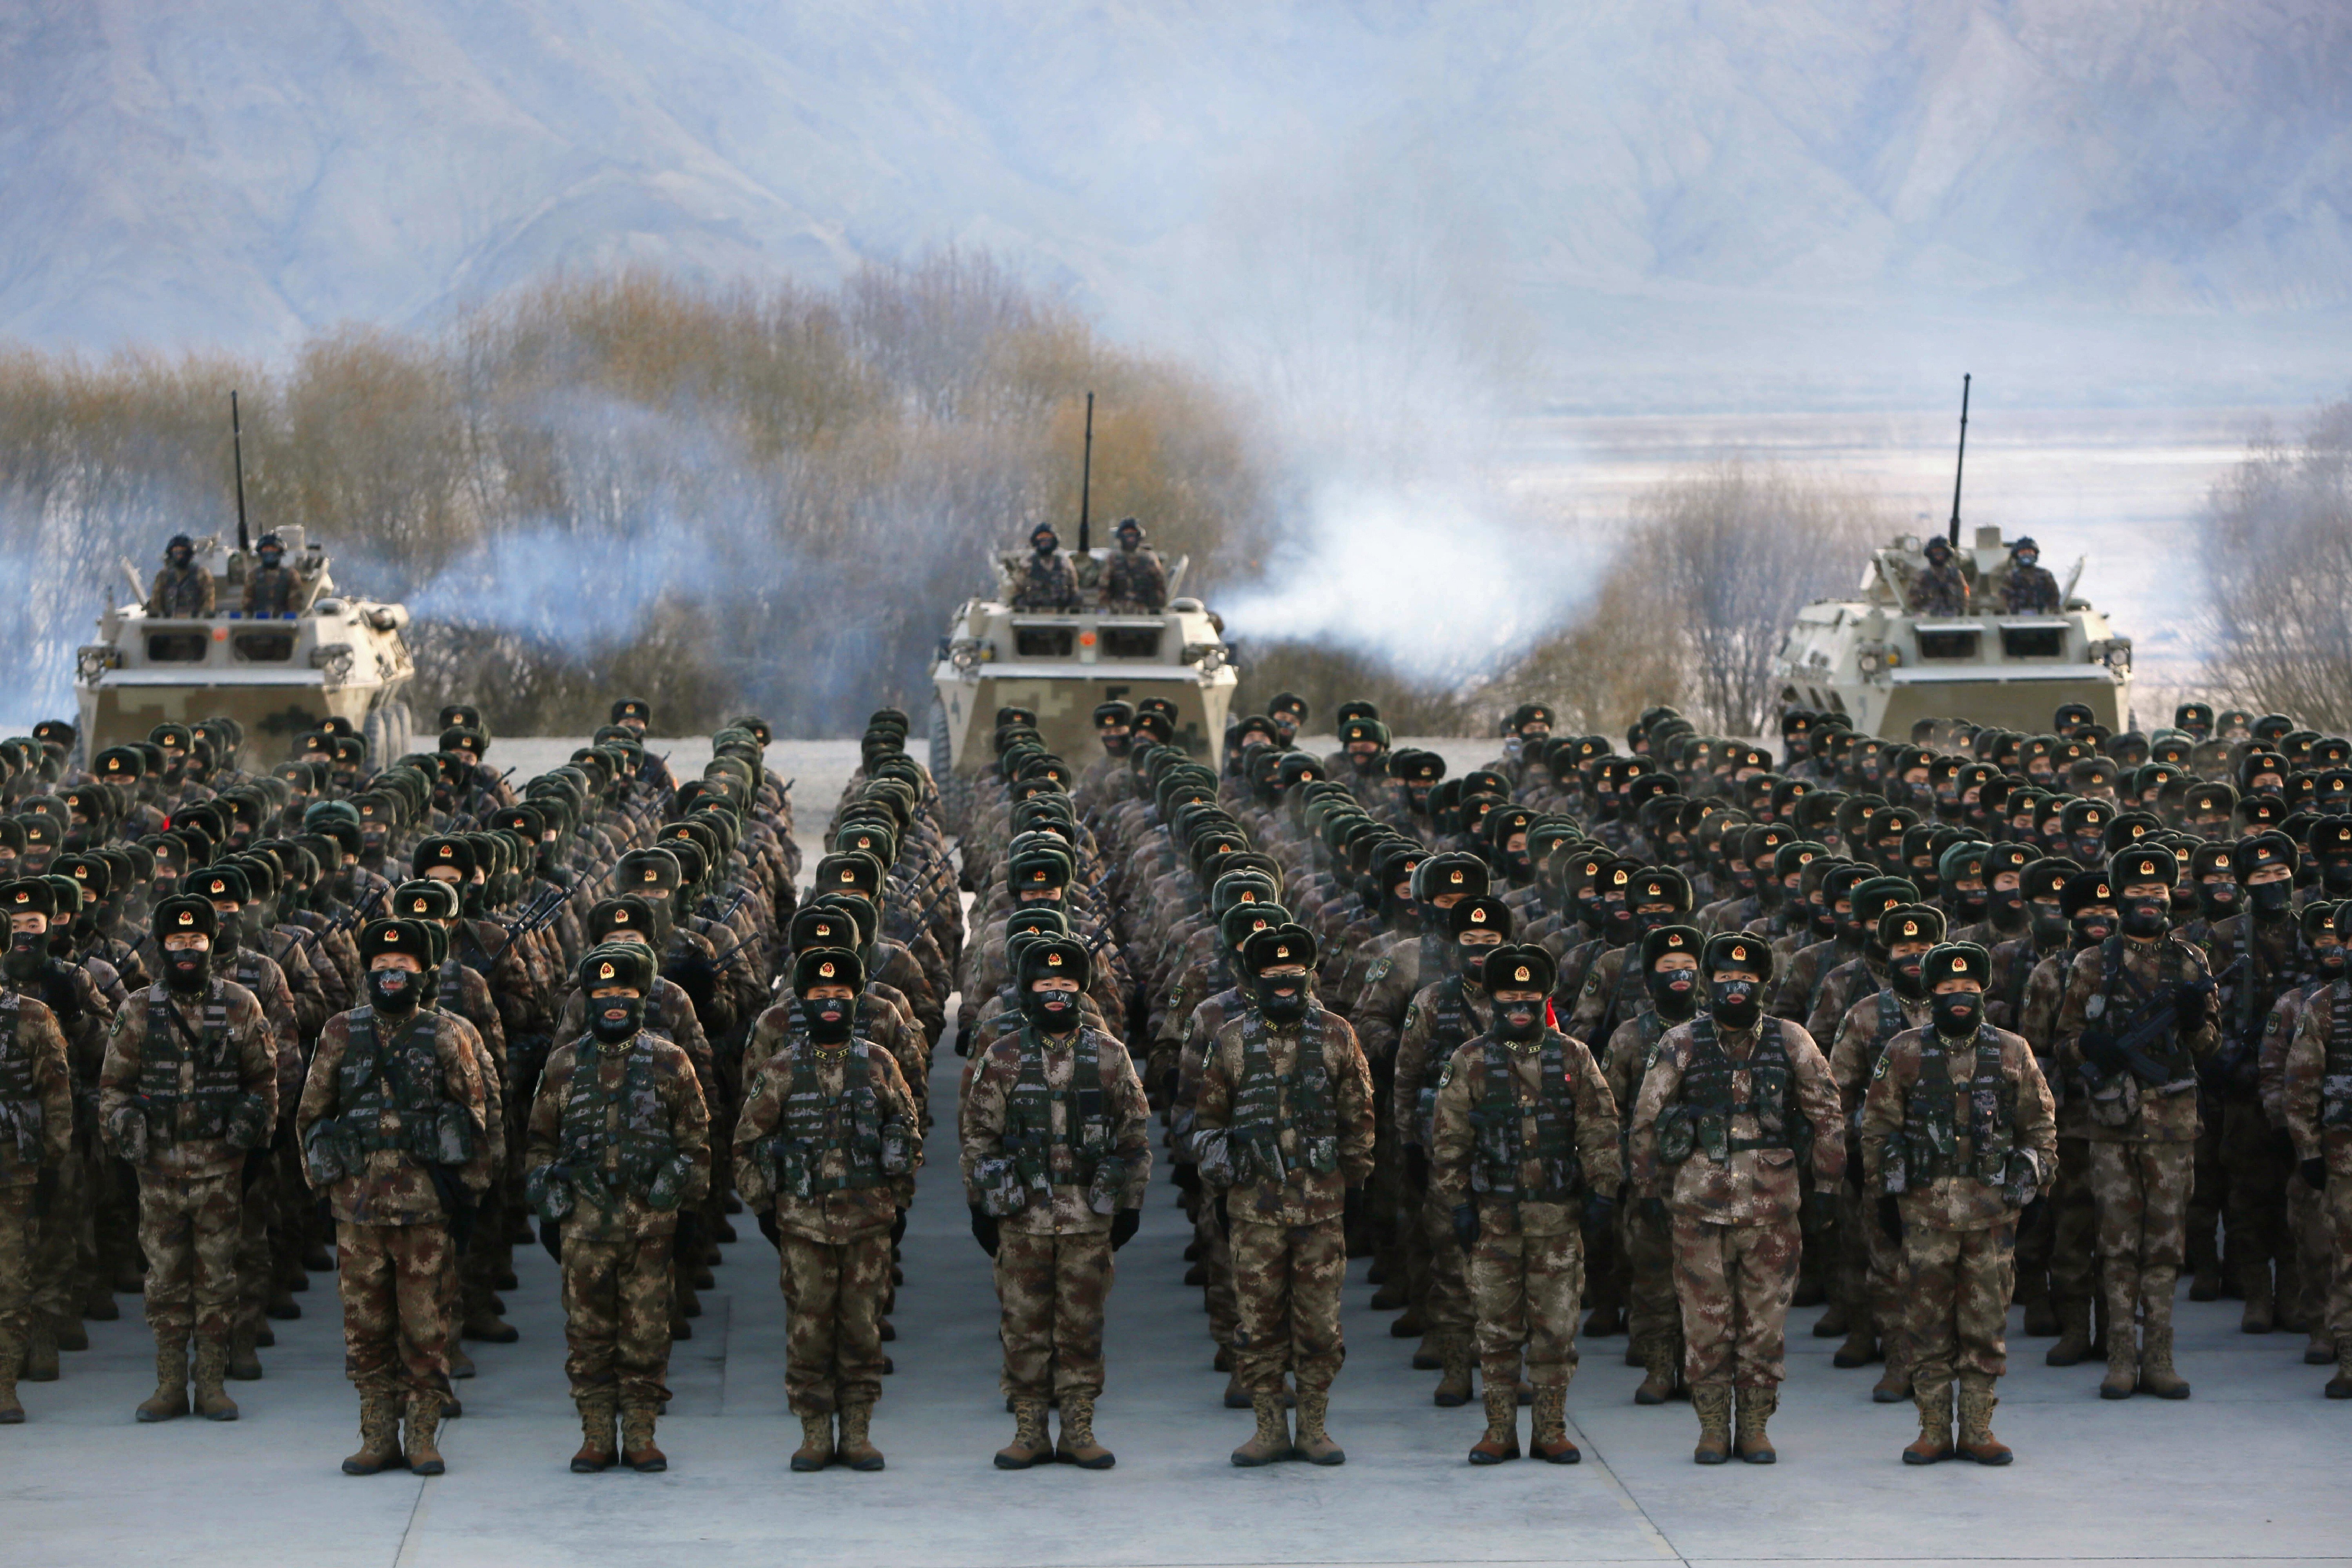 Chinese soldiers rally while training in Kashgar in northwestern China’s Xinjiang Uygur autonomous region in January. Photo: Chinatopix via AP